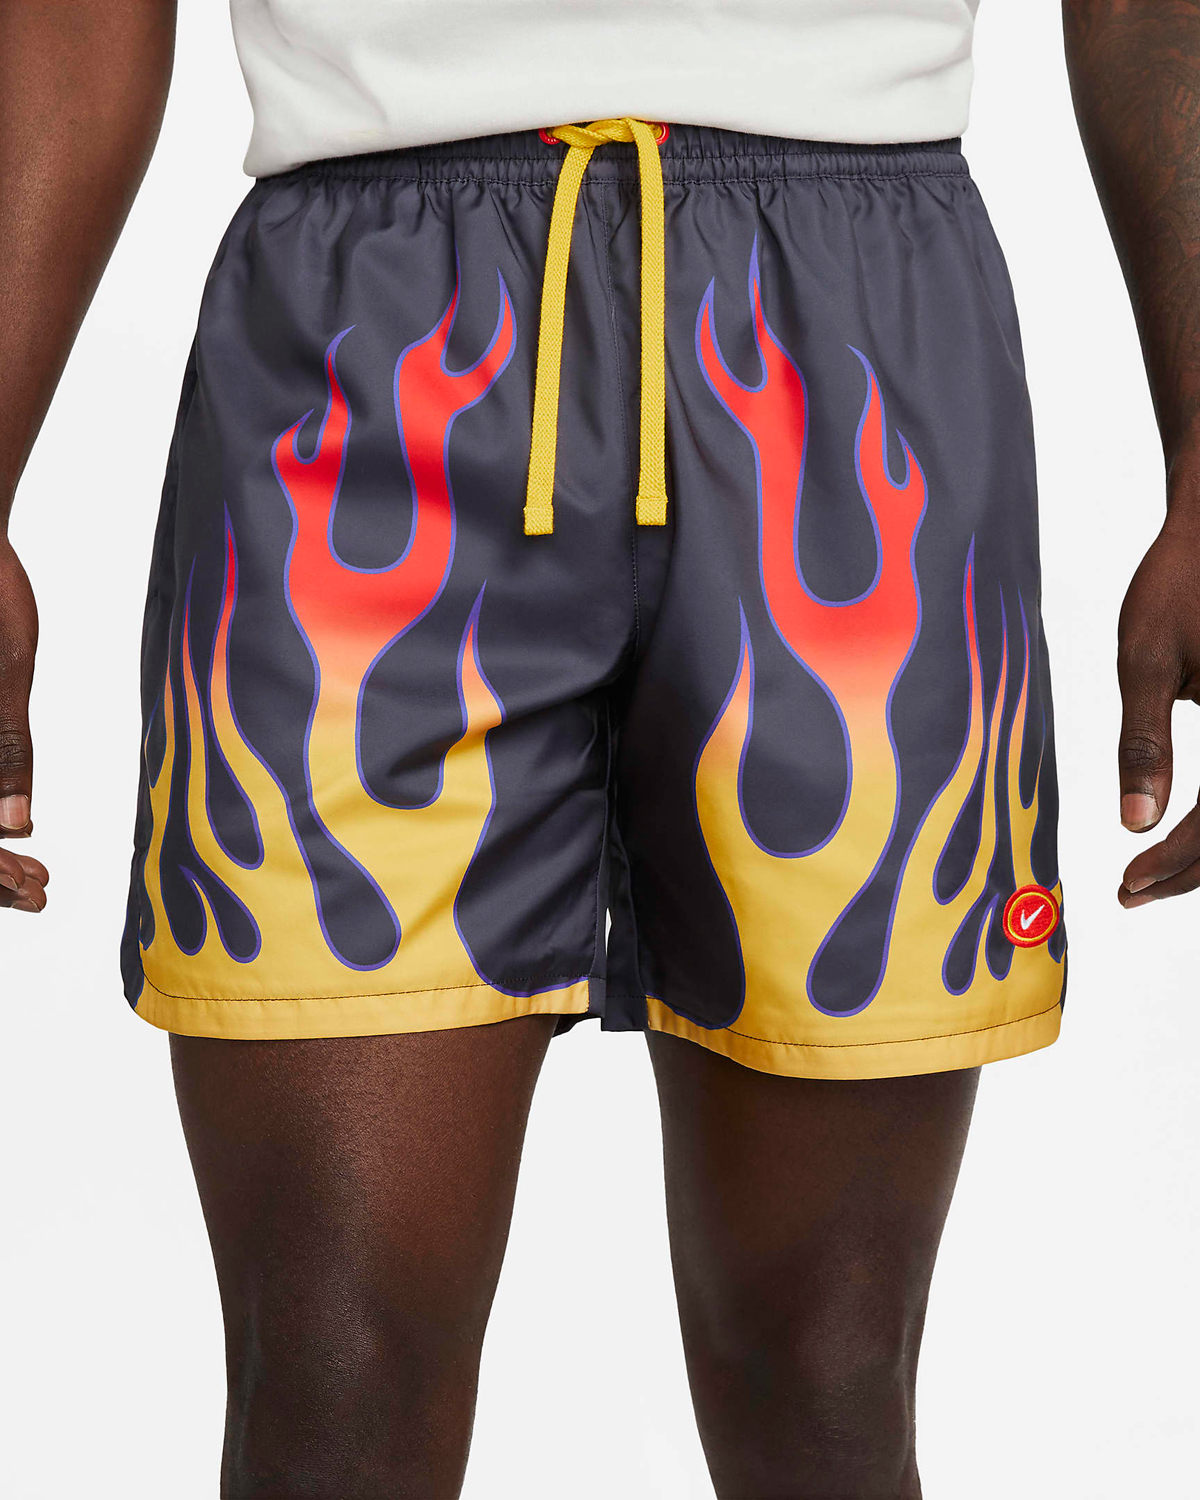 Nike-PG-6-Hot-Wheels-Shorts-Match